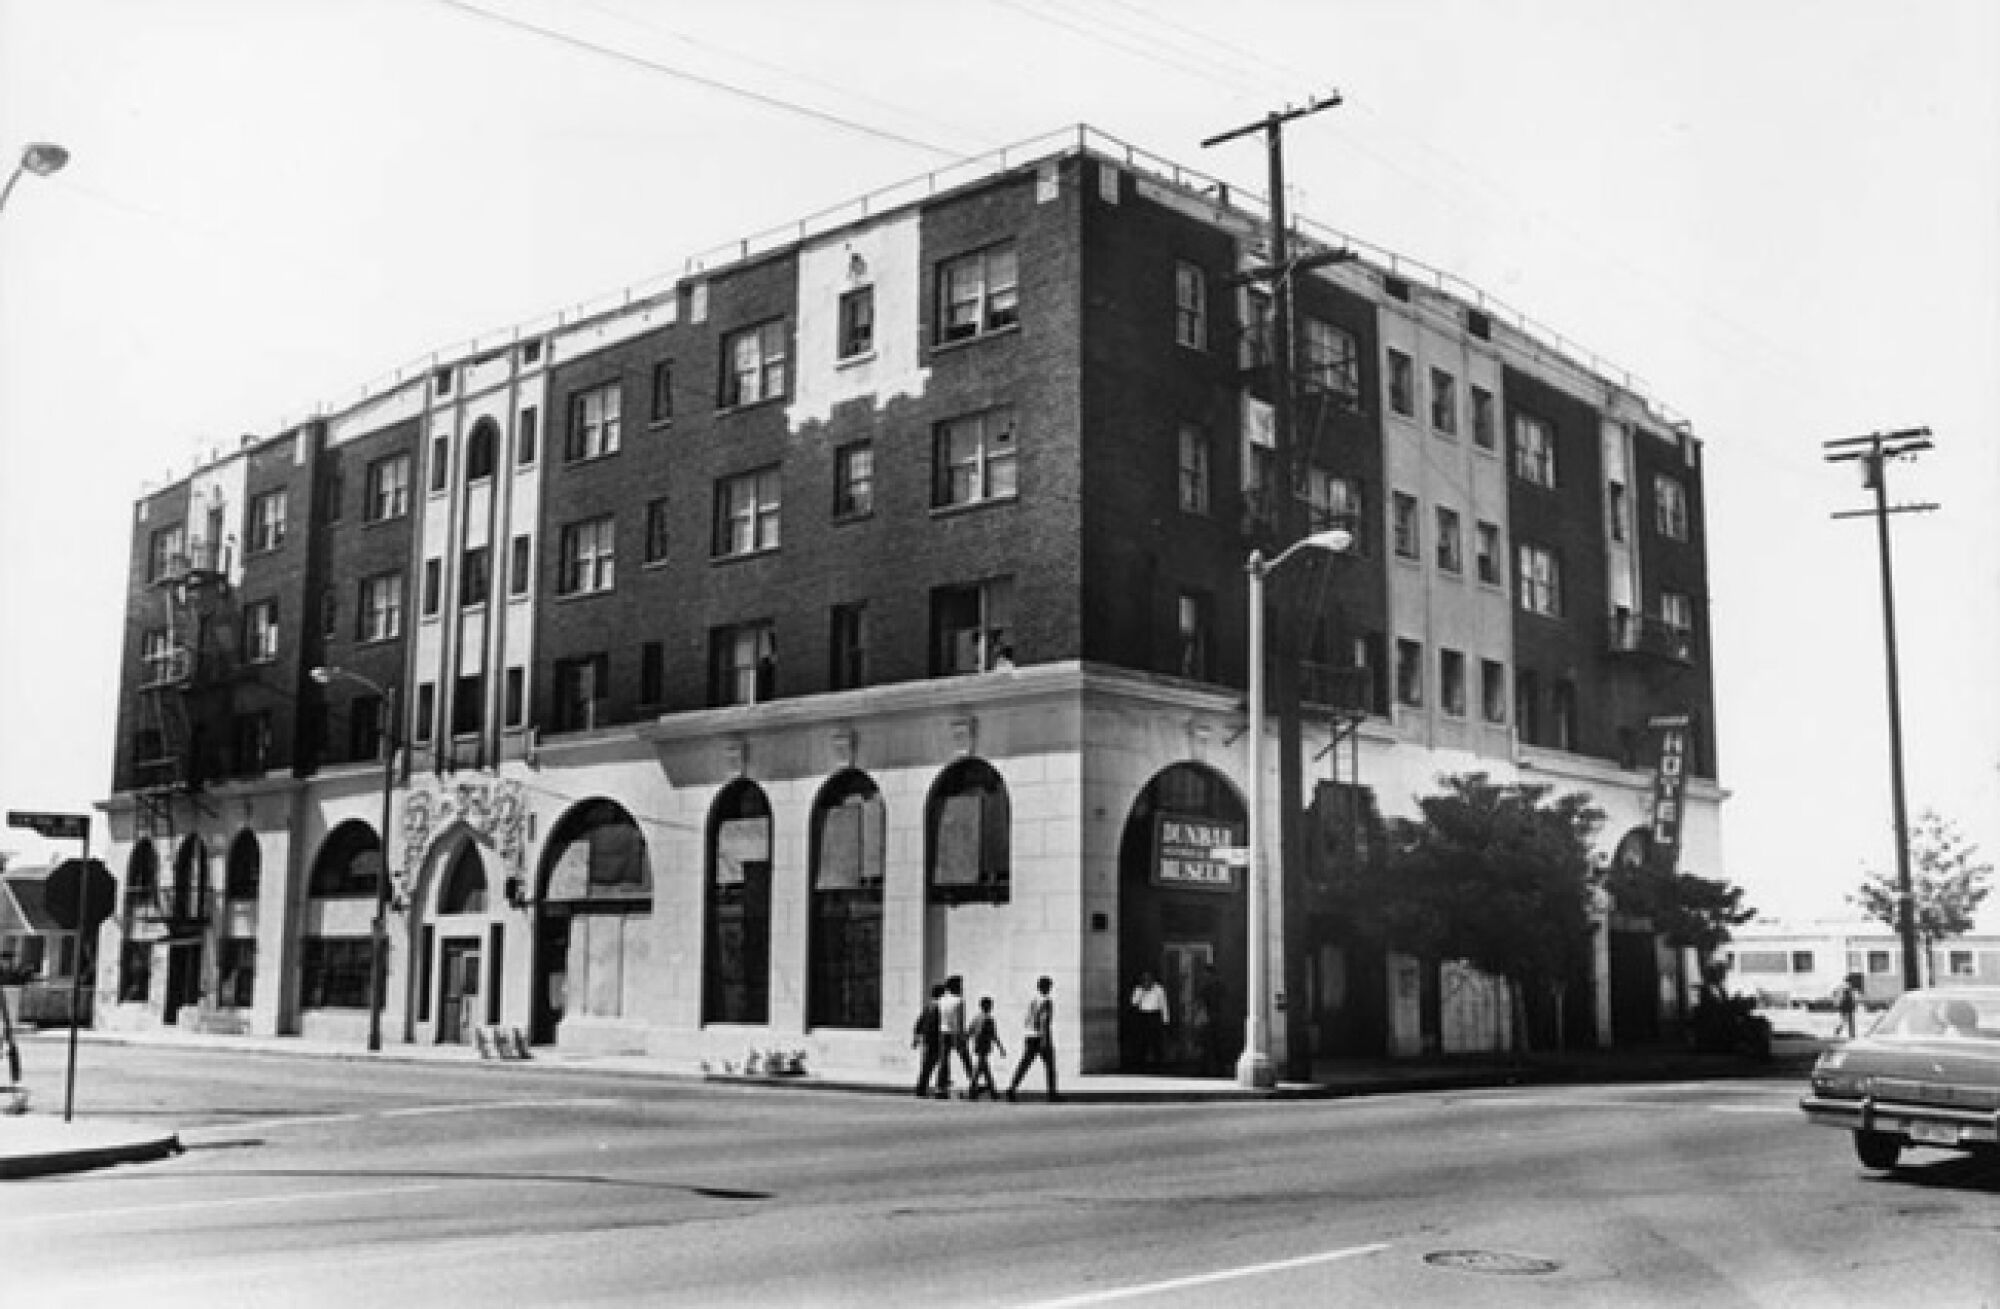 The Dunbar Hotel in 1987 